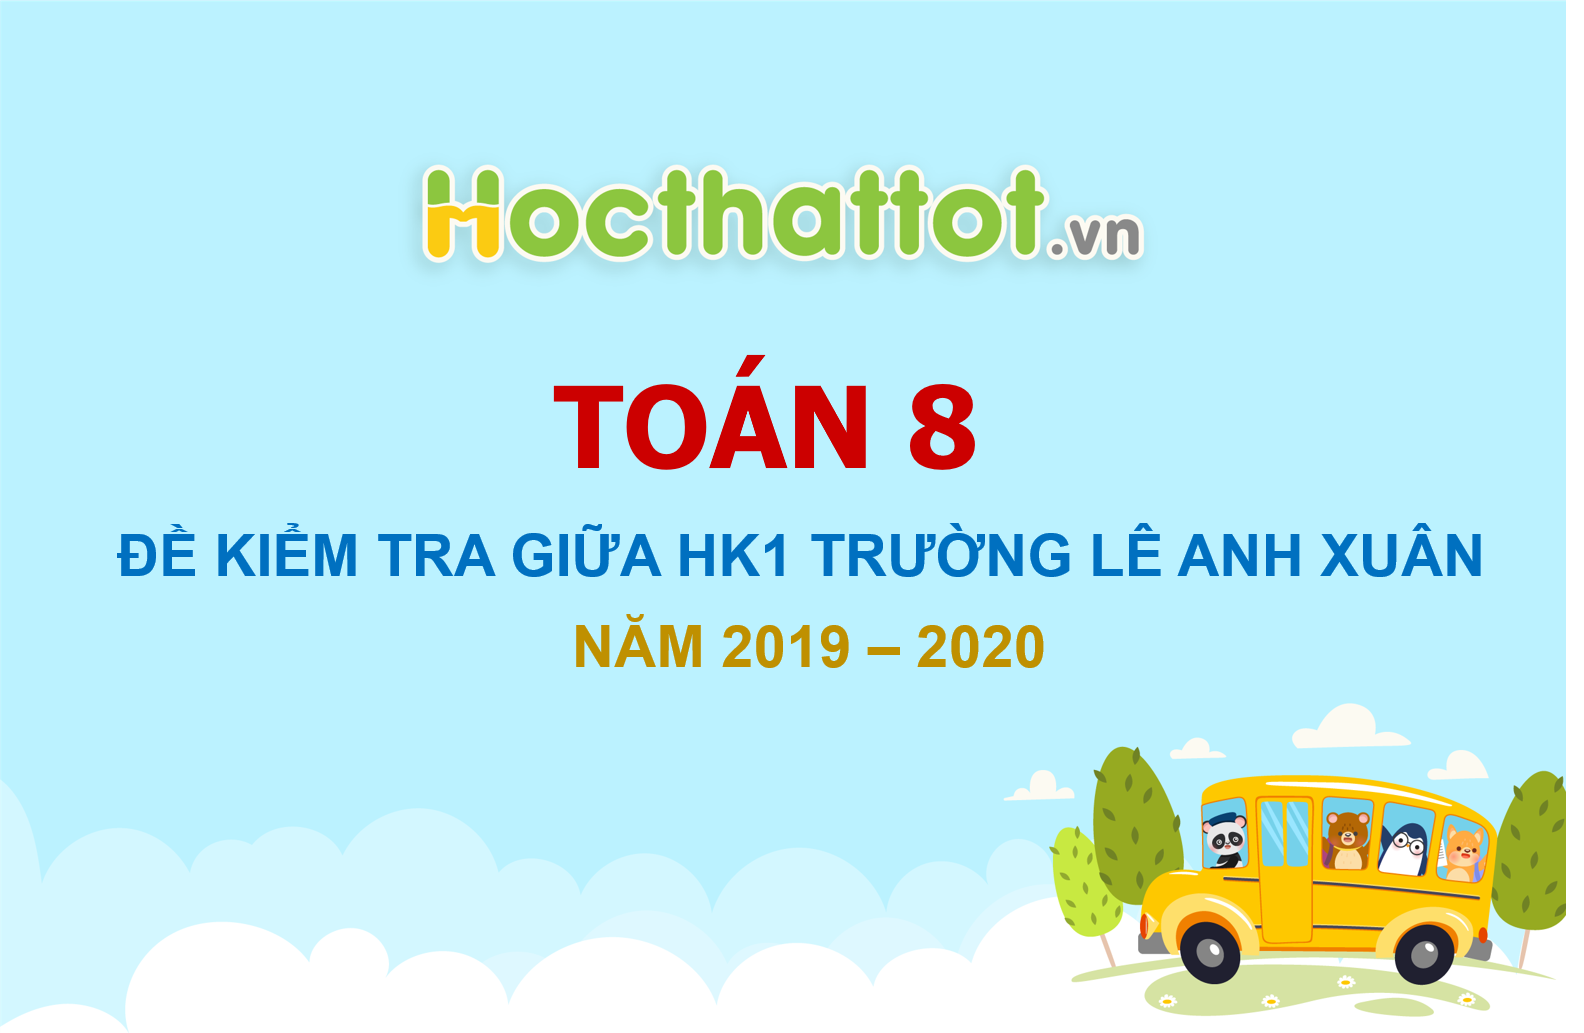 de-kiem-tra-giua-hk1-toan-8-nam-2019-2020-truong-le-anh-xuan-tp-hcm